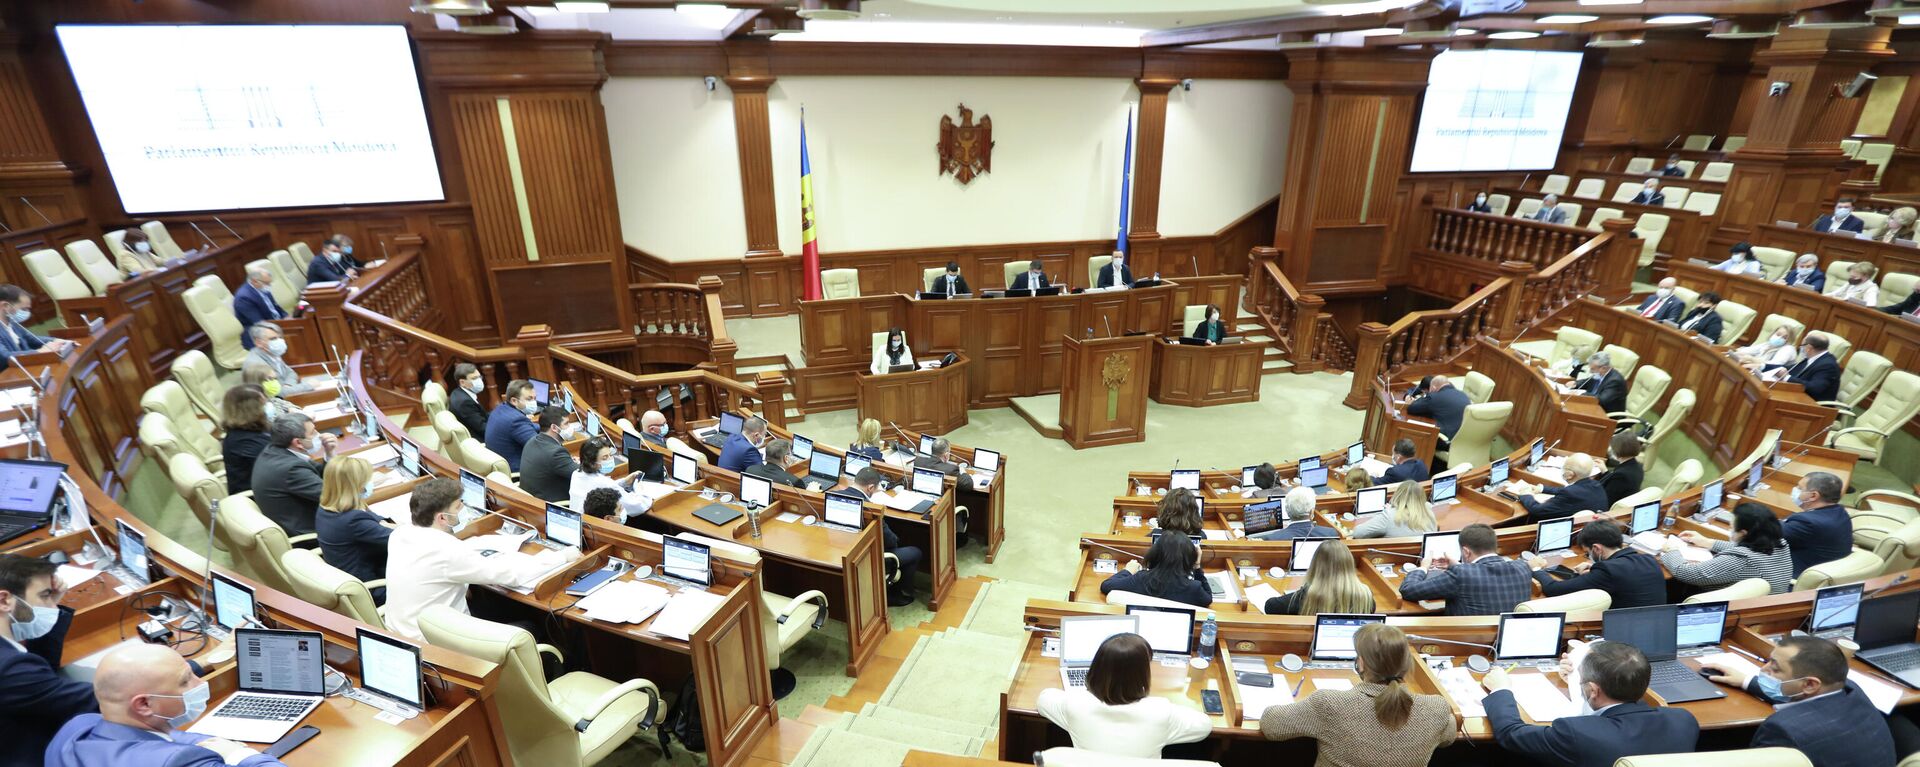 Заседание парламента Молдовы 18 ноября 2021 - Sputnik Молдова, 1920, 03.02.2022